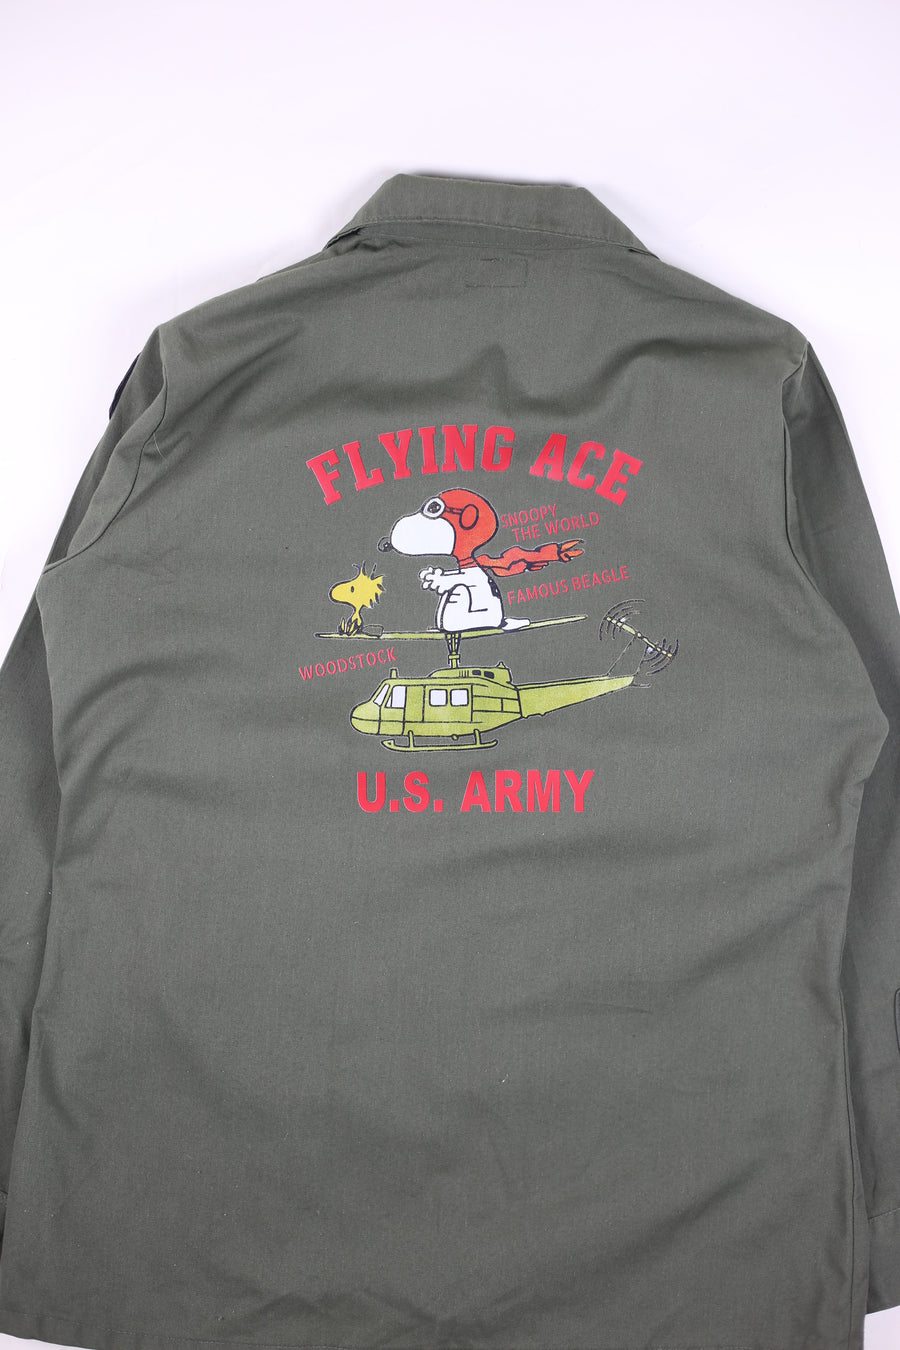 Og 507 Us ARMY shirt - M -